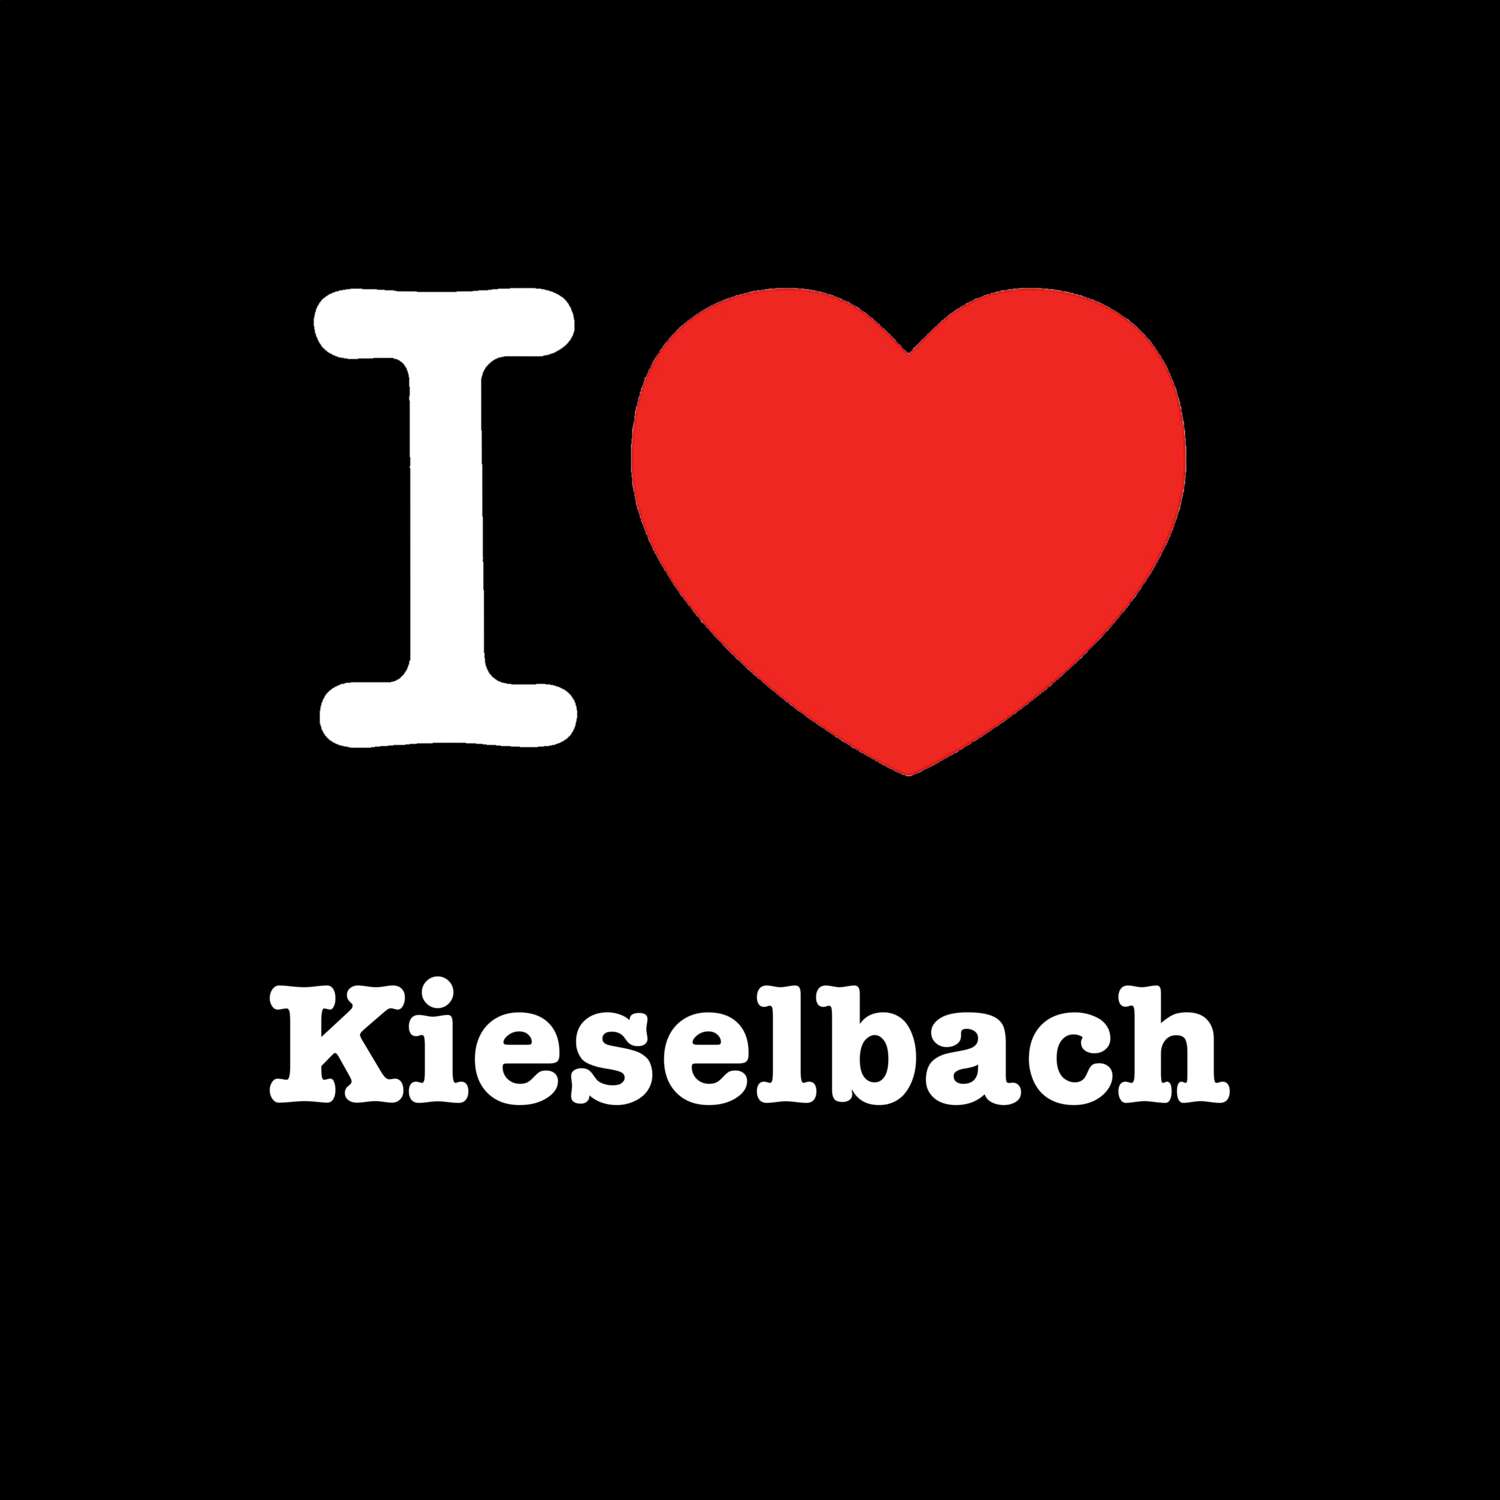 Kieselbach T-Shirt »I love«